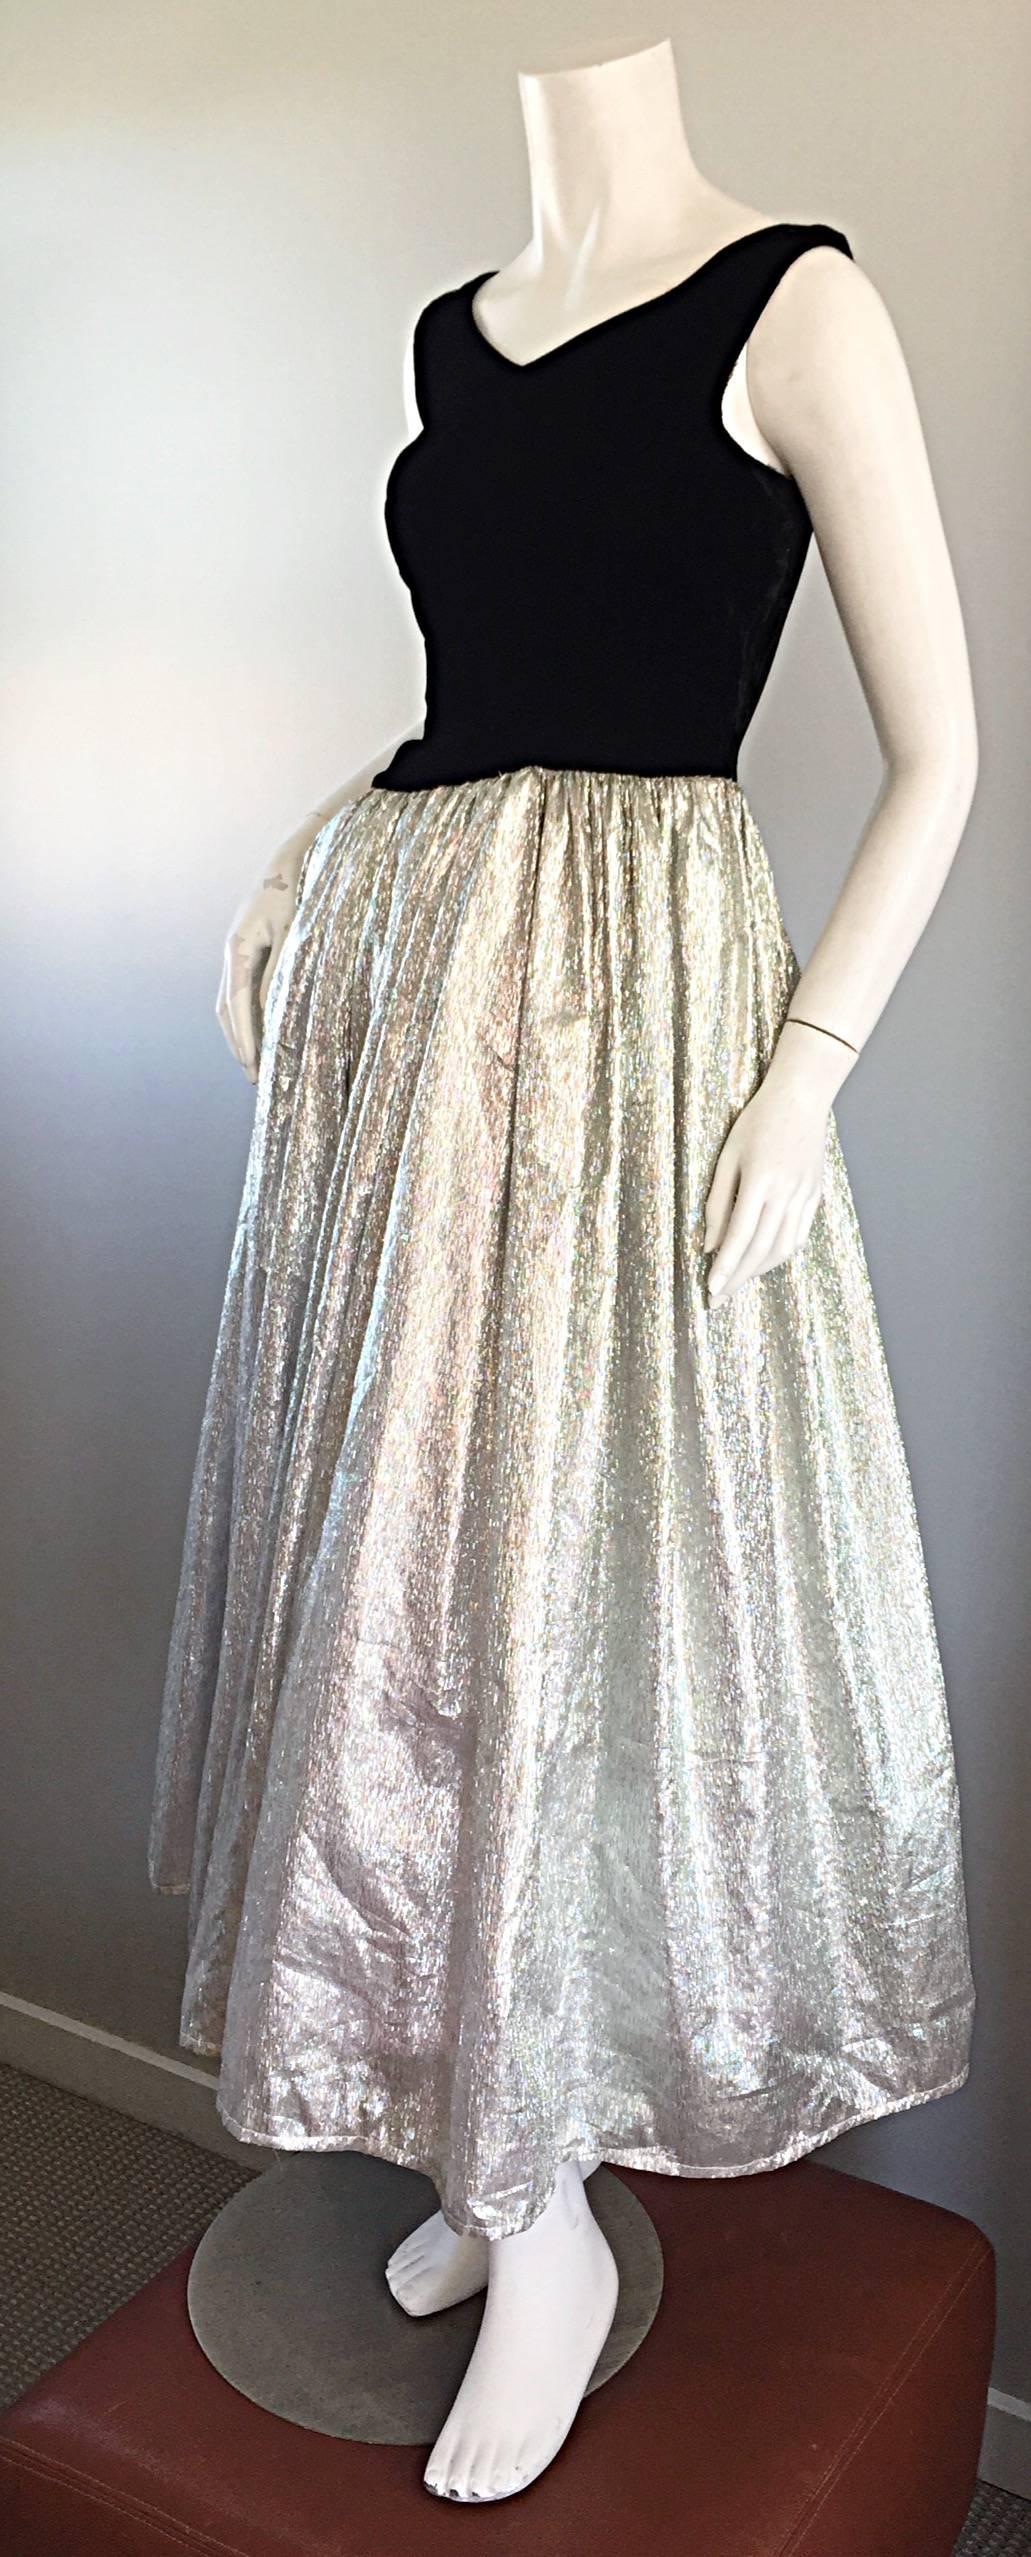 iridescent metallic dress